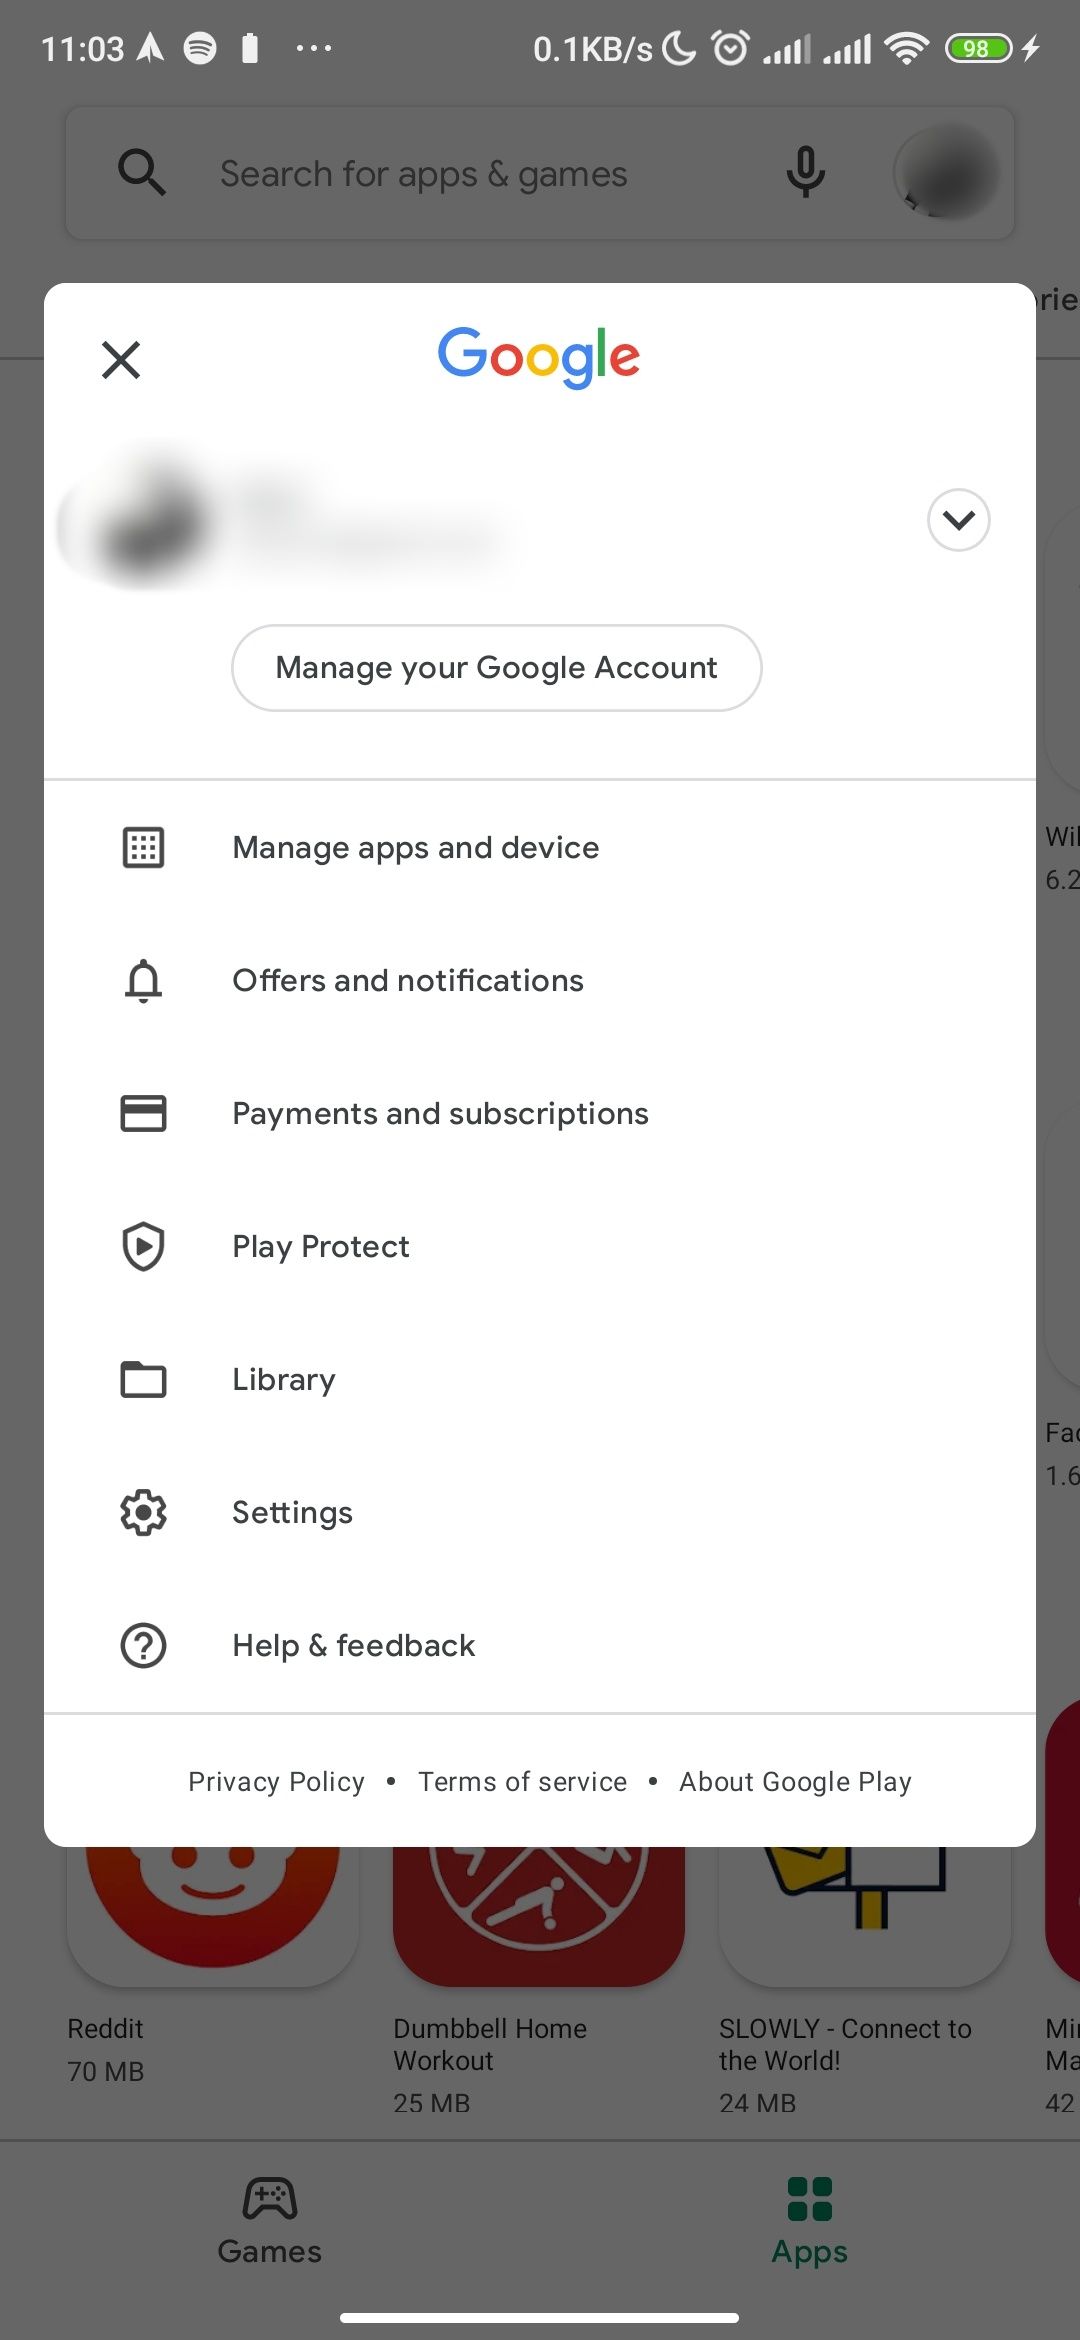 Google Play Store's main menu 